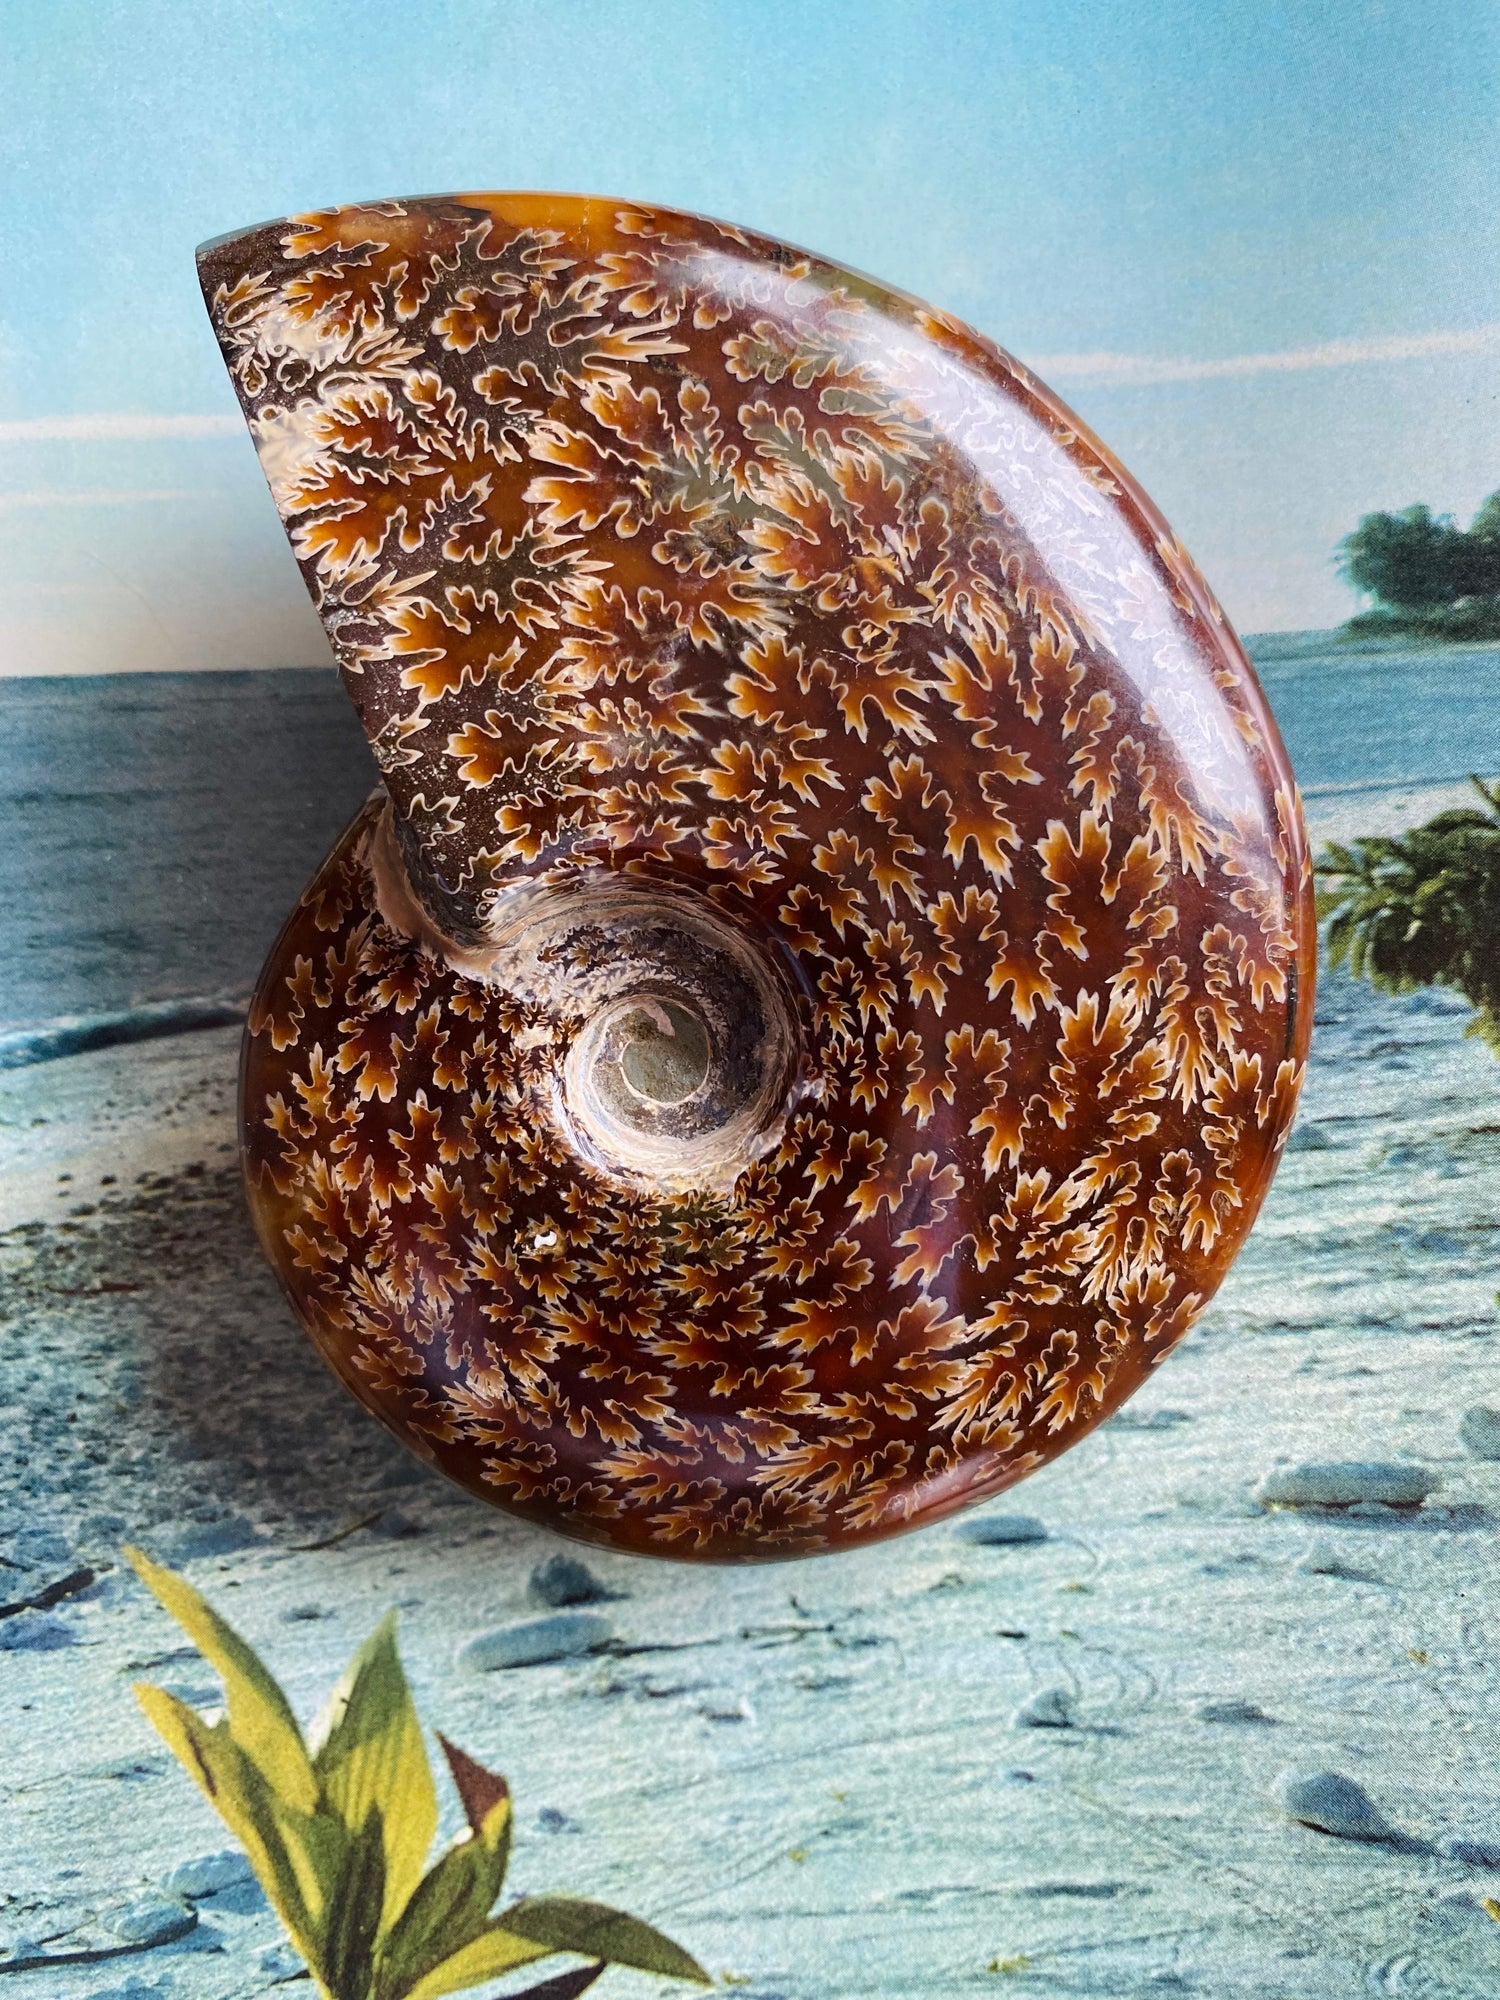 Polished Ammonite Fossil Madagascar 4.75"x4" - Moon Room Shop and Wellness